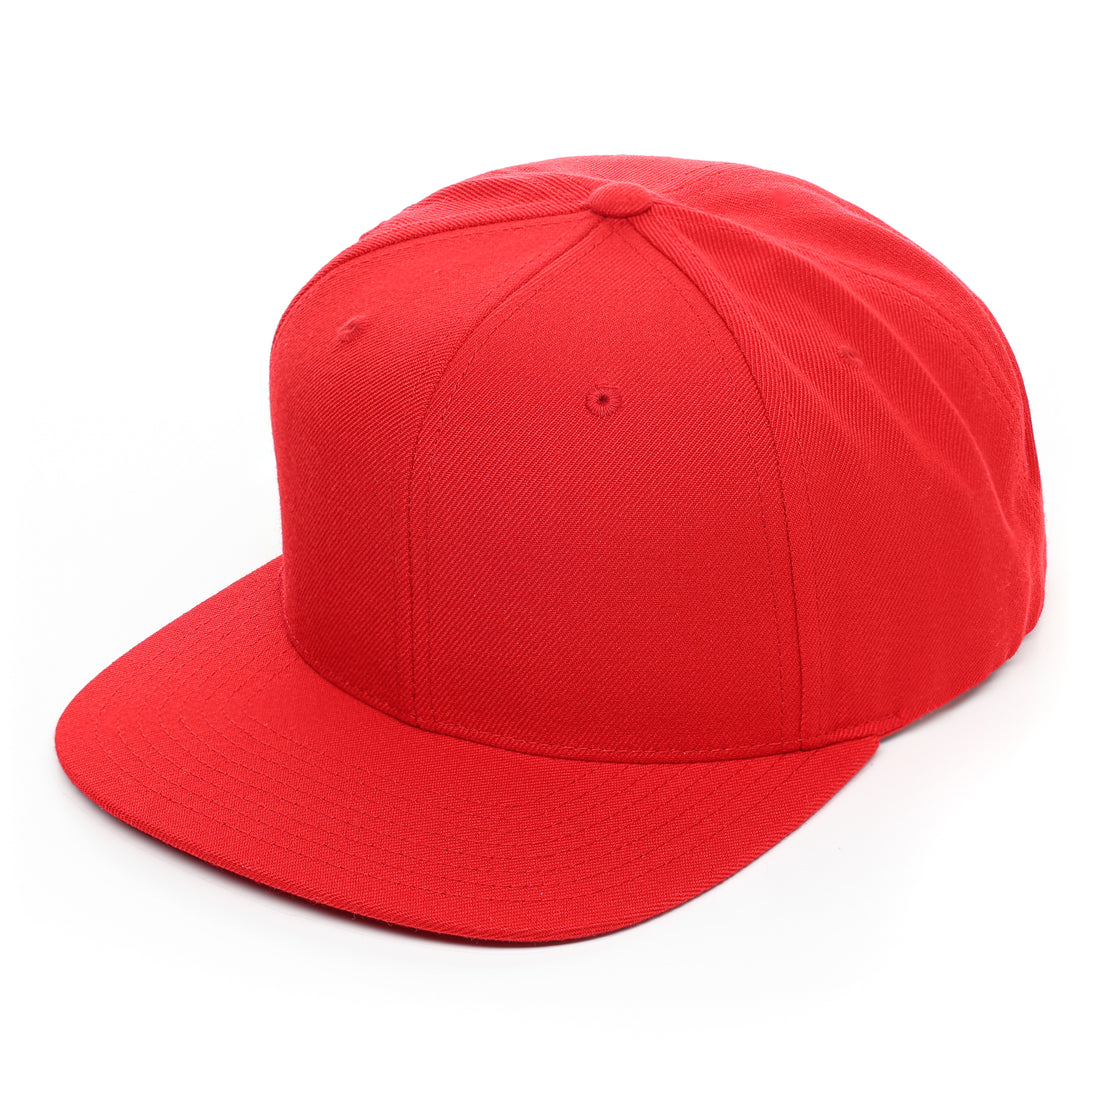 Red Hat, Red trucker hat, red flat bill trucker hat, Richardson 510, Classic Flat Bill Trucker Hat, Snap back,Heather Gray, Custom Branded, Custom design hat